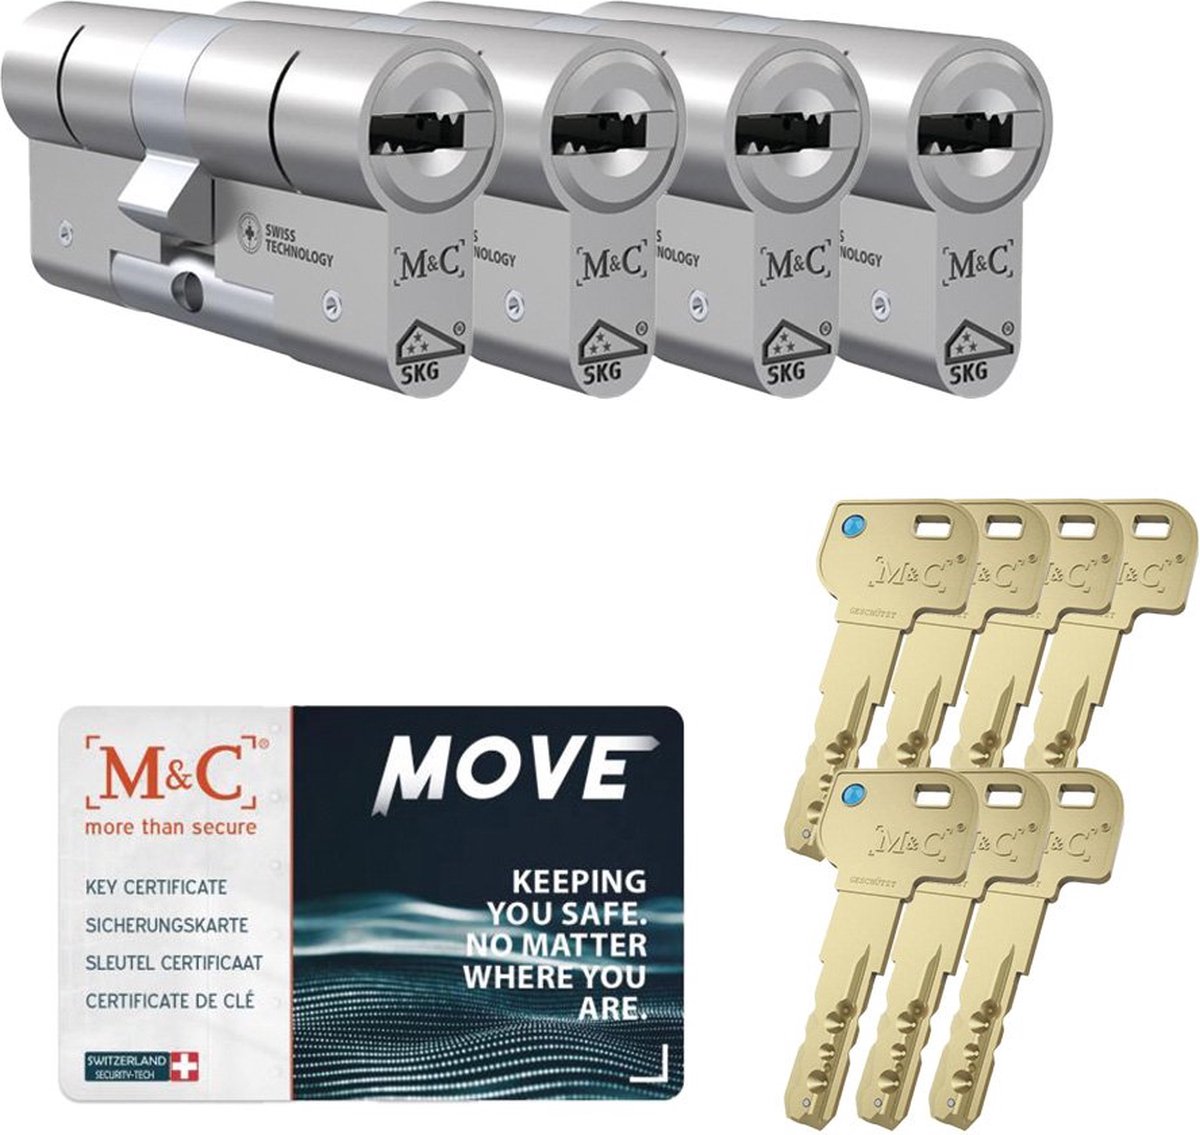 M&C Move SKG*** cilinderslot gelijksluitende set van 4